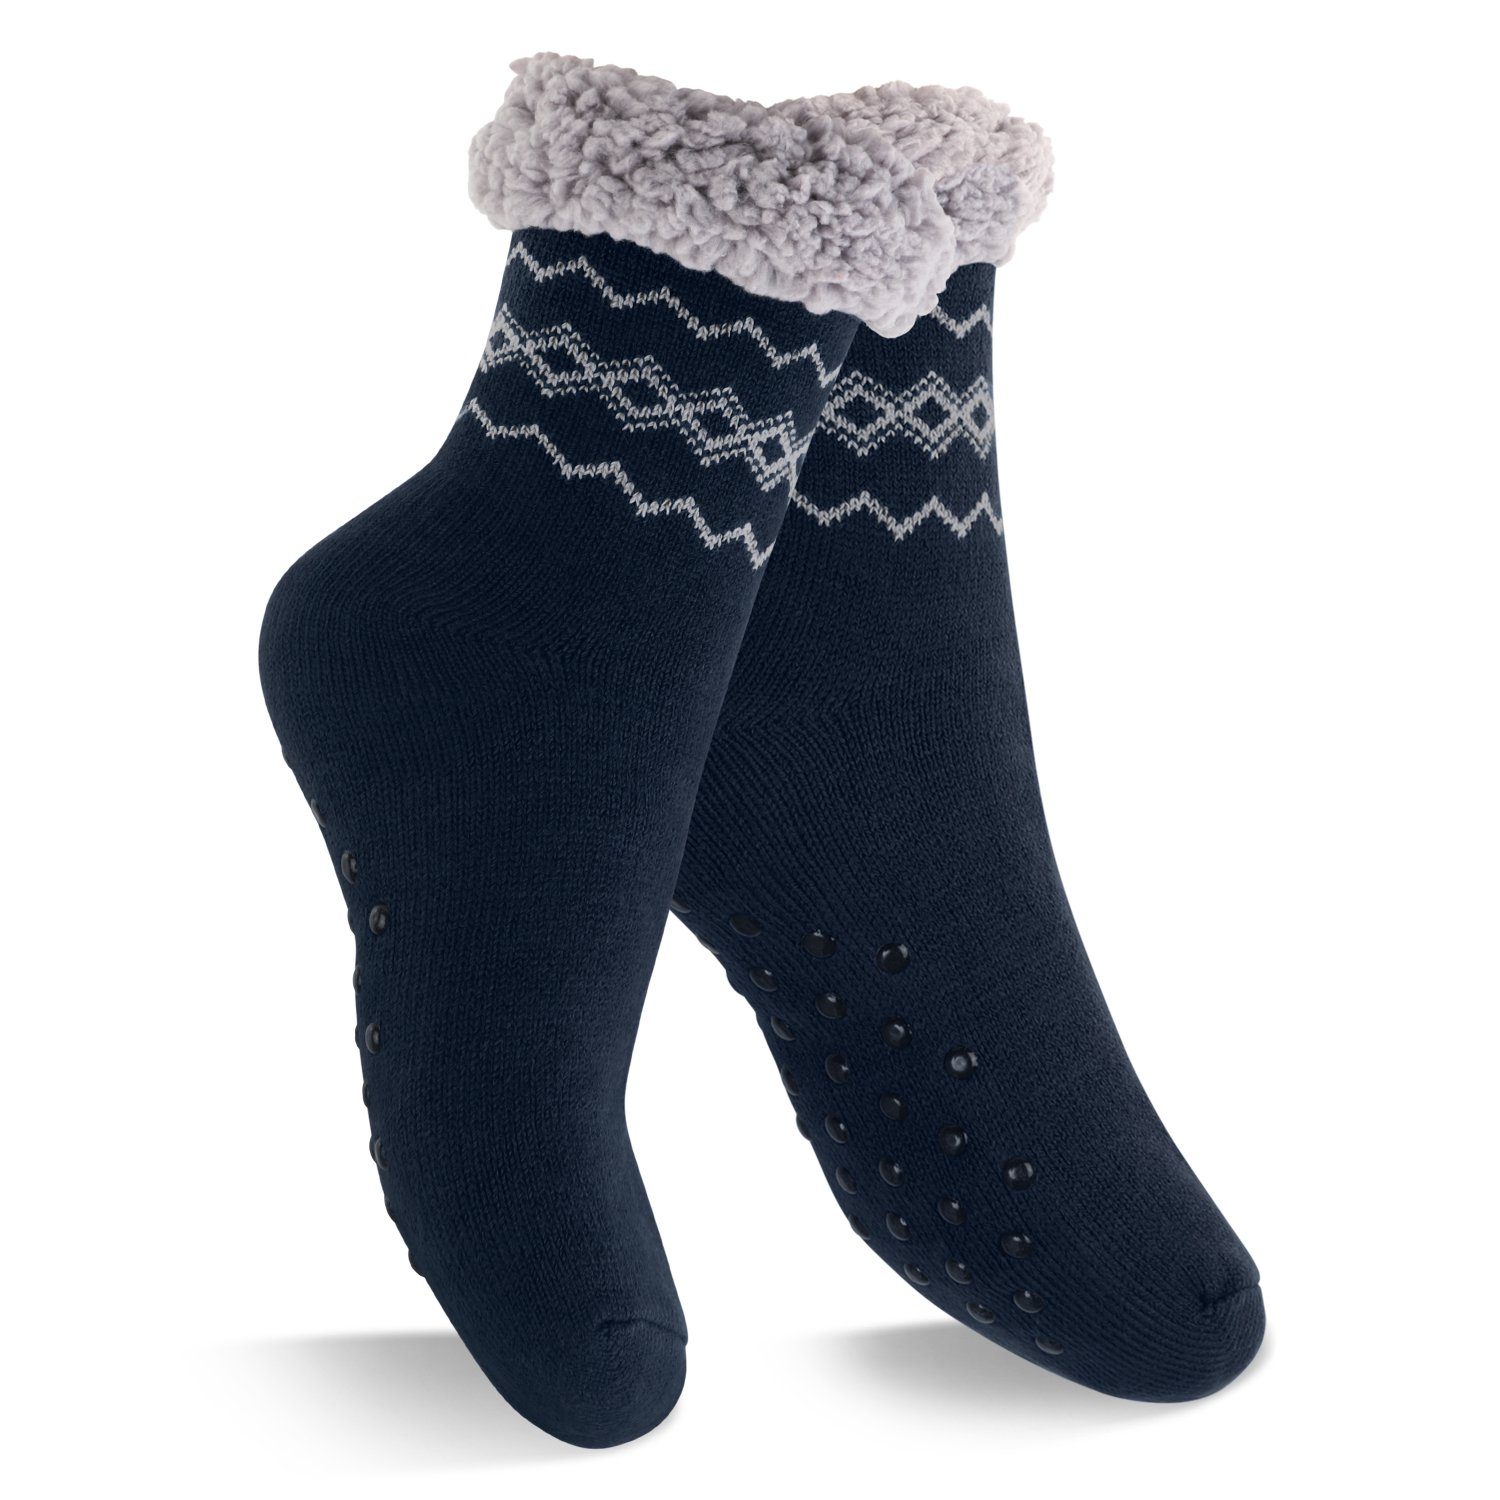 Herren & Winter Haussocken Footstar Paar) Damen Navy Kuschelsocken (1/2 ABS-Socken für